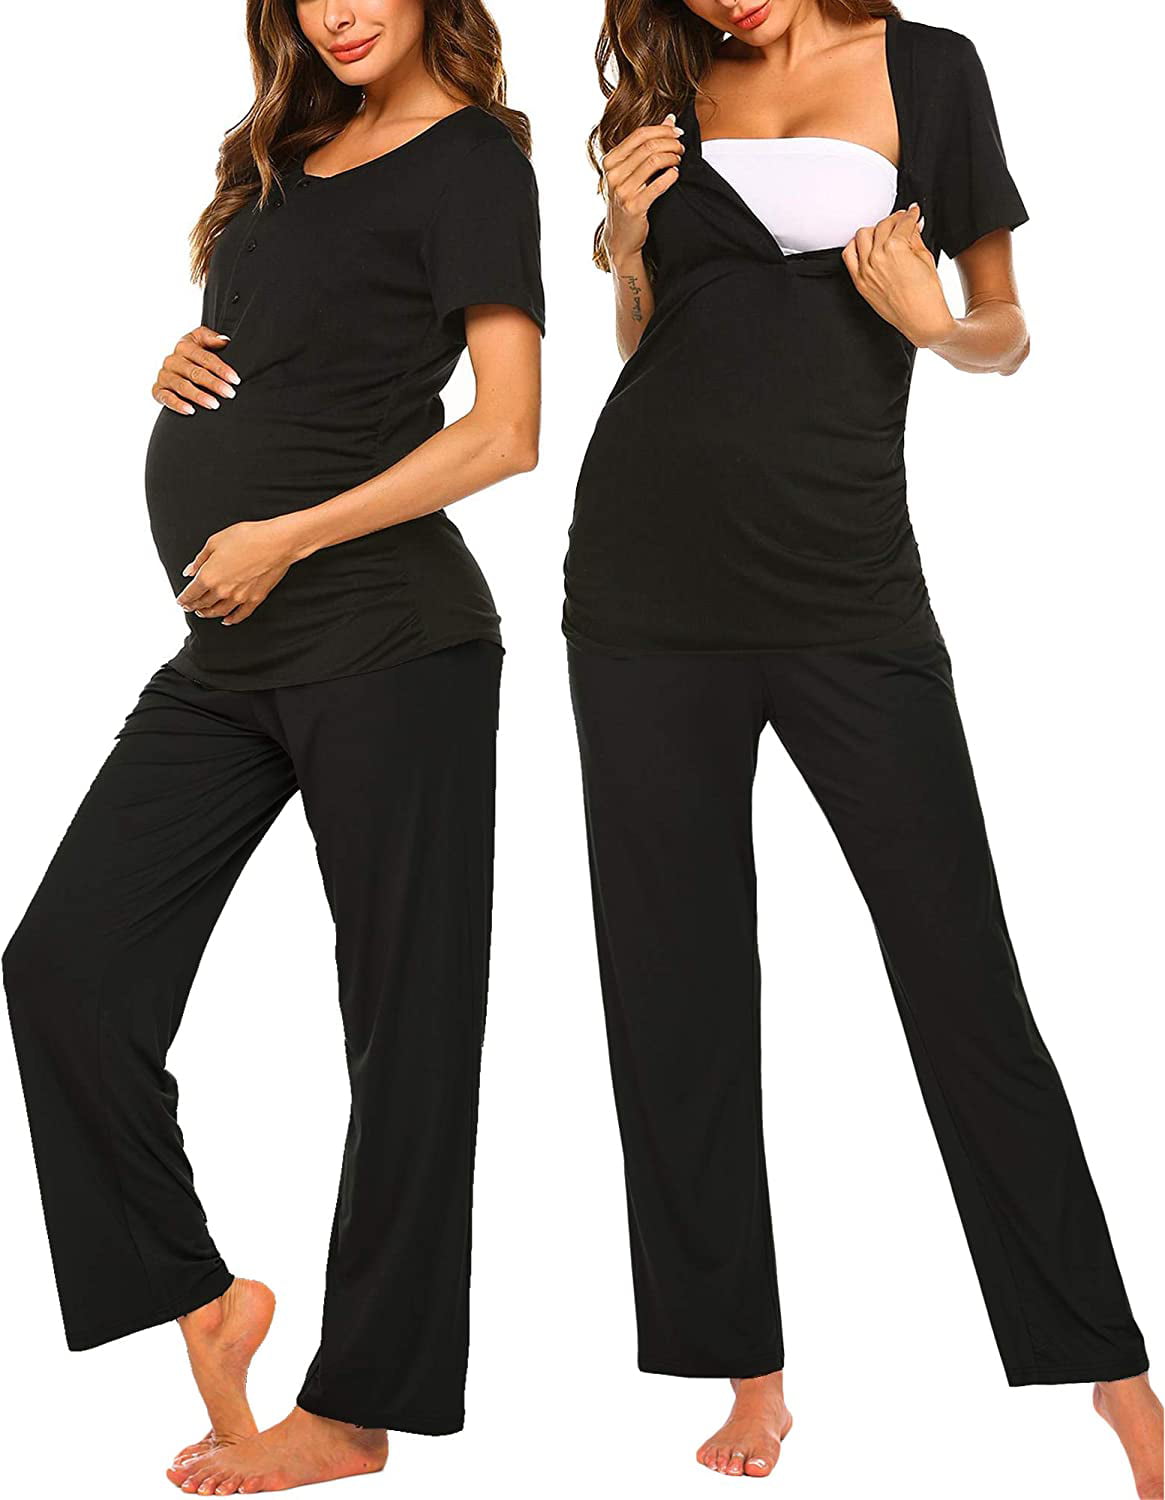 Ekouaer Womens Maternity Nursing Pajamas Sets Breastfeeding Printed Sleepwear Short Sleeve 2 Pcs Henley Top and Pants Set 